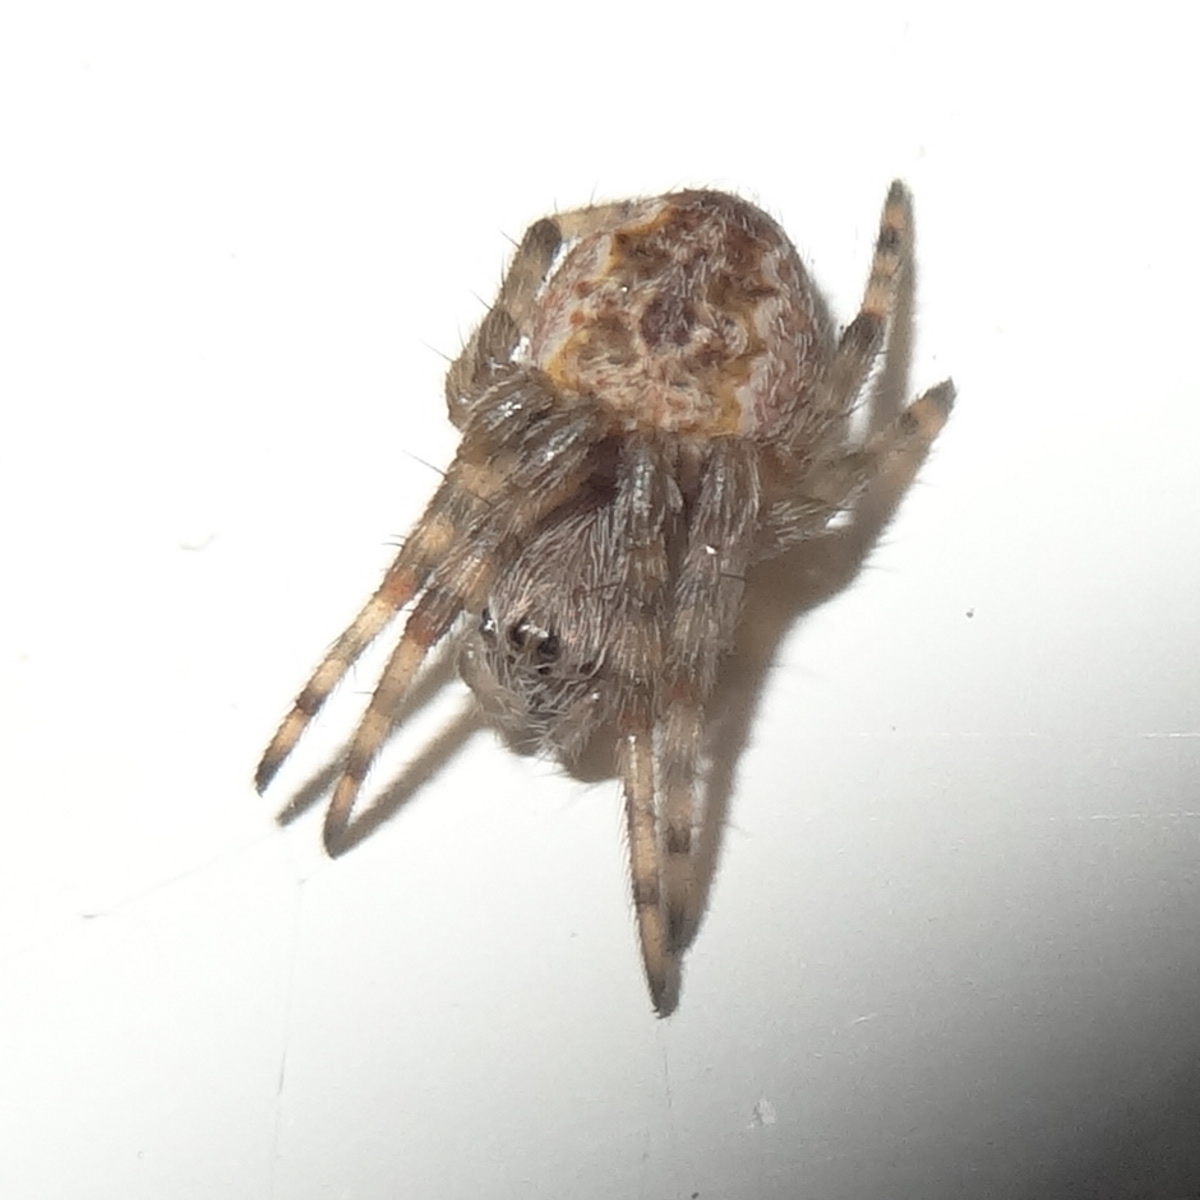 Tiny orb spider